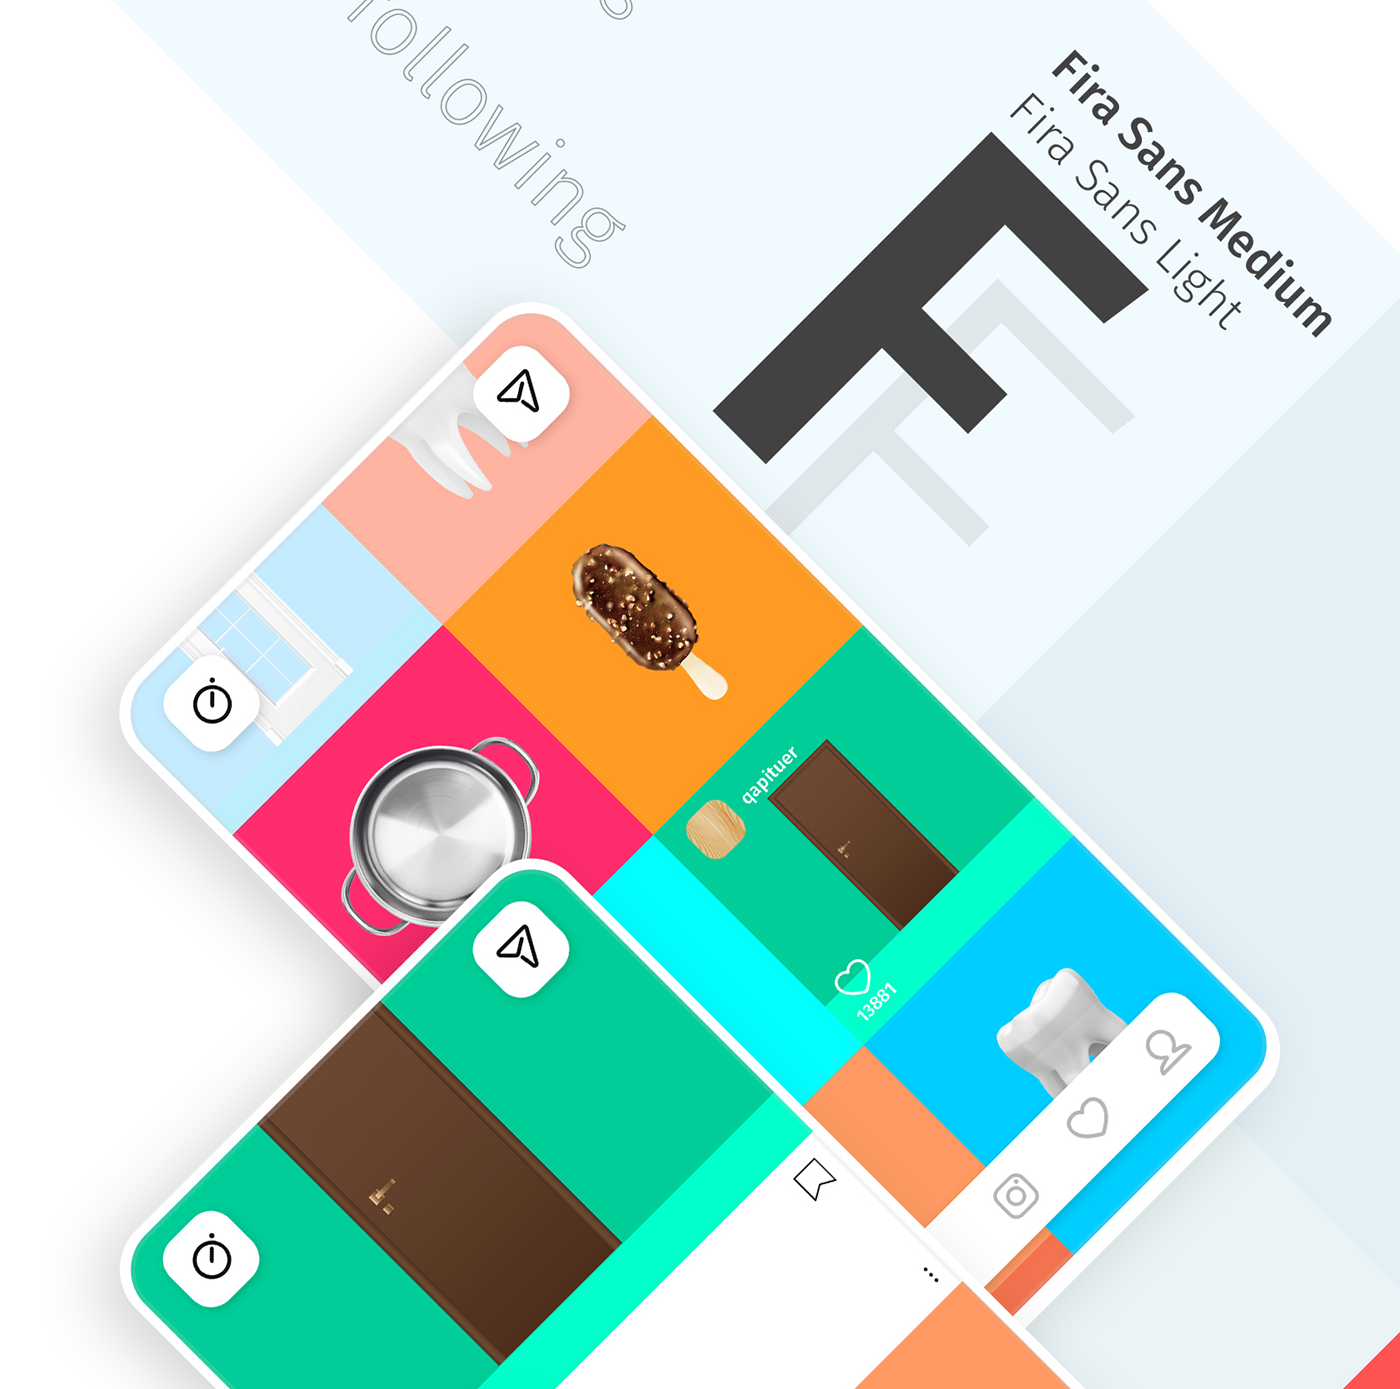 instagram concept Mobile app ui design insta samirverdi baku azerbaijan hamburg user interface